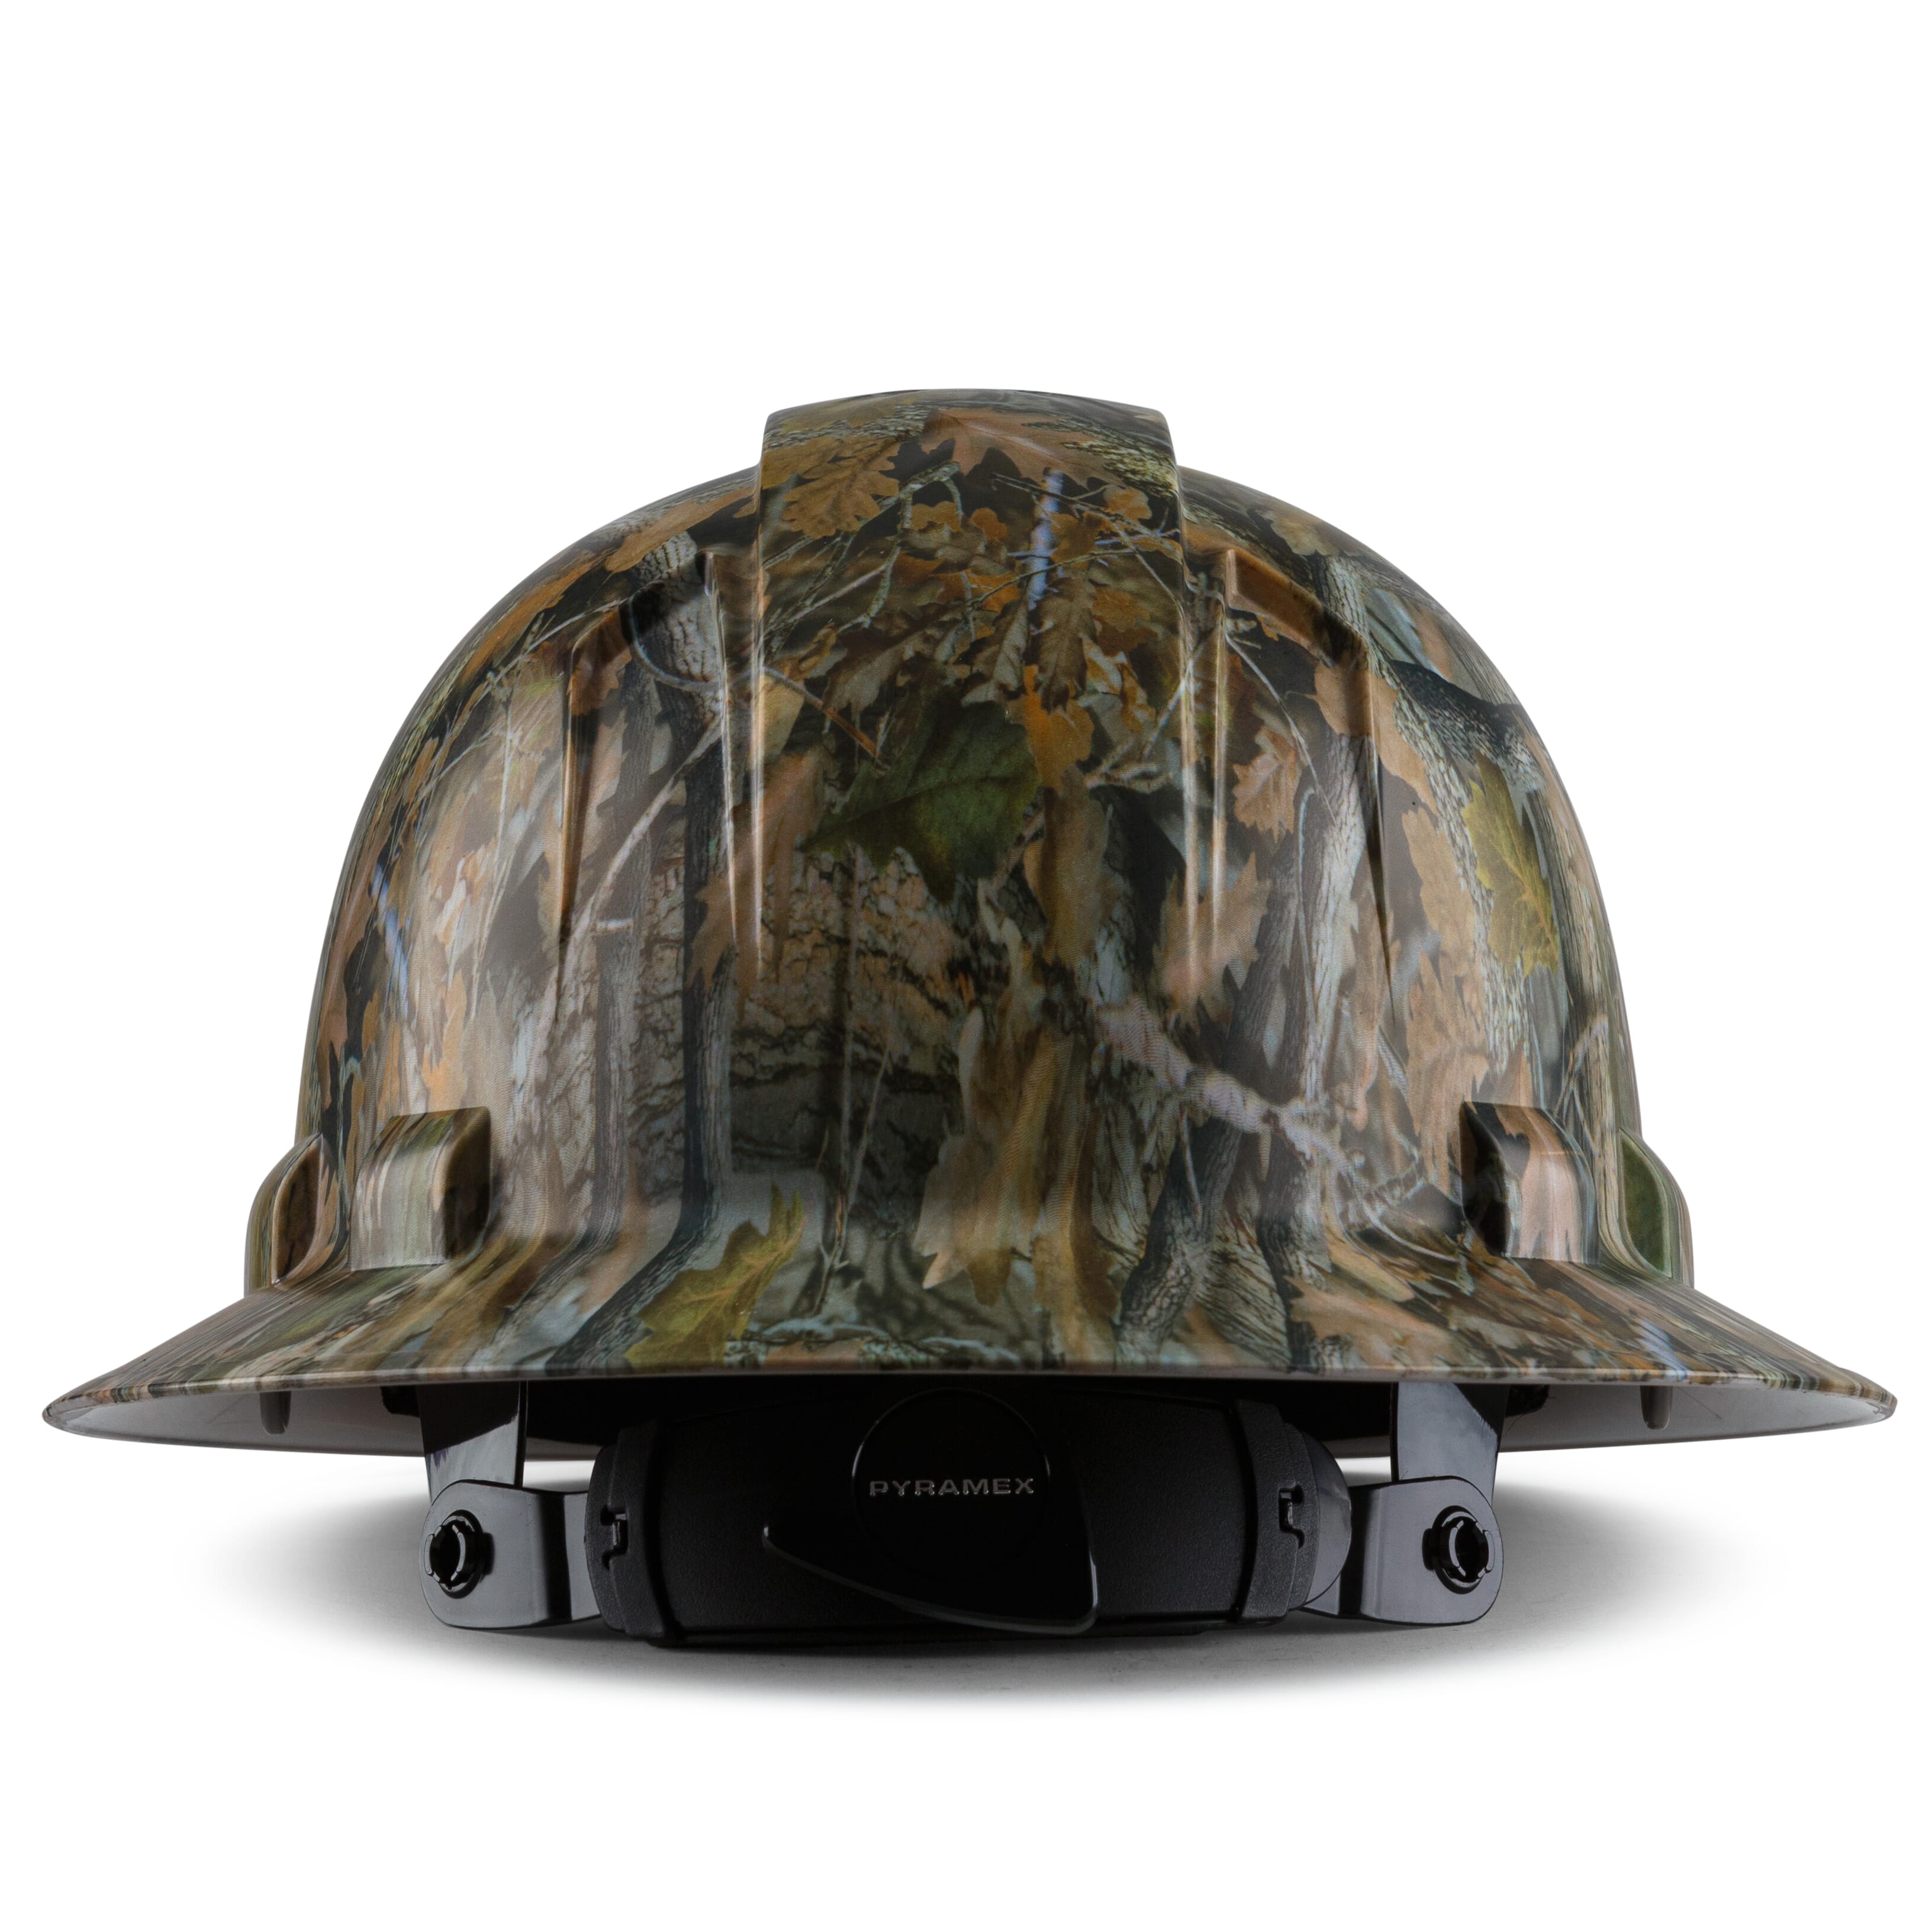 Full Brim Pyramex Hard Hat, Custom Forest Camo, Light Gray Hat Camo Design, Safety Helmet, 6 Point